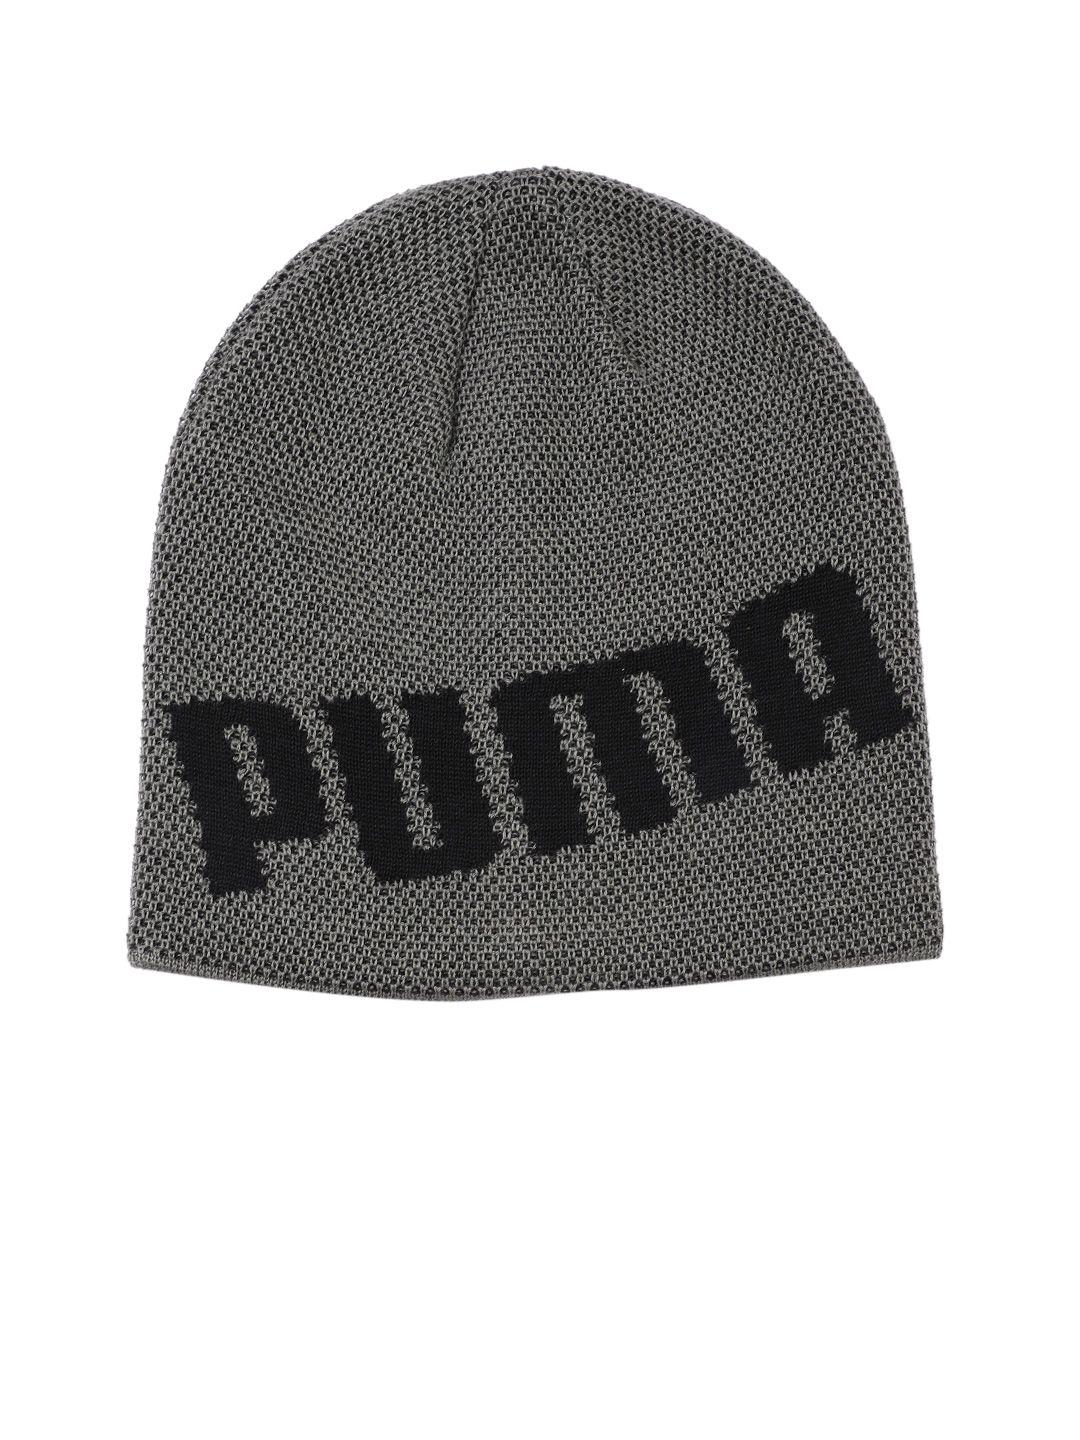 puma-unisex-grey-self-design-beanie